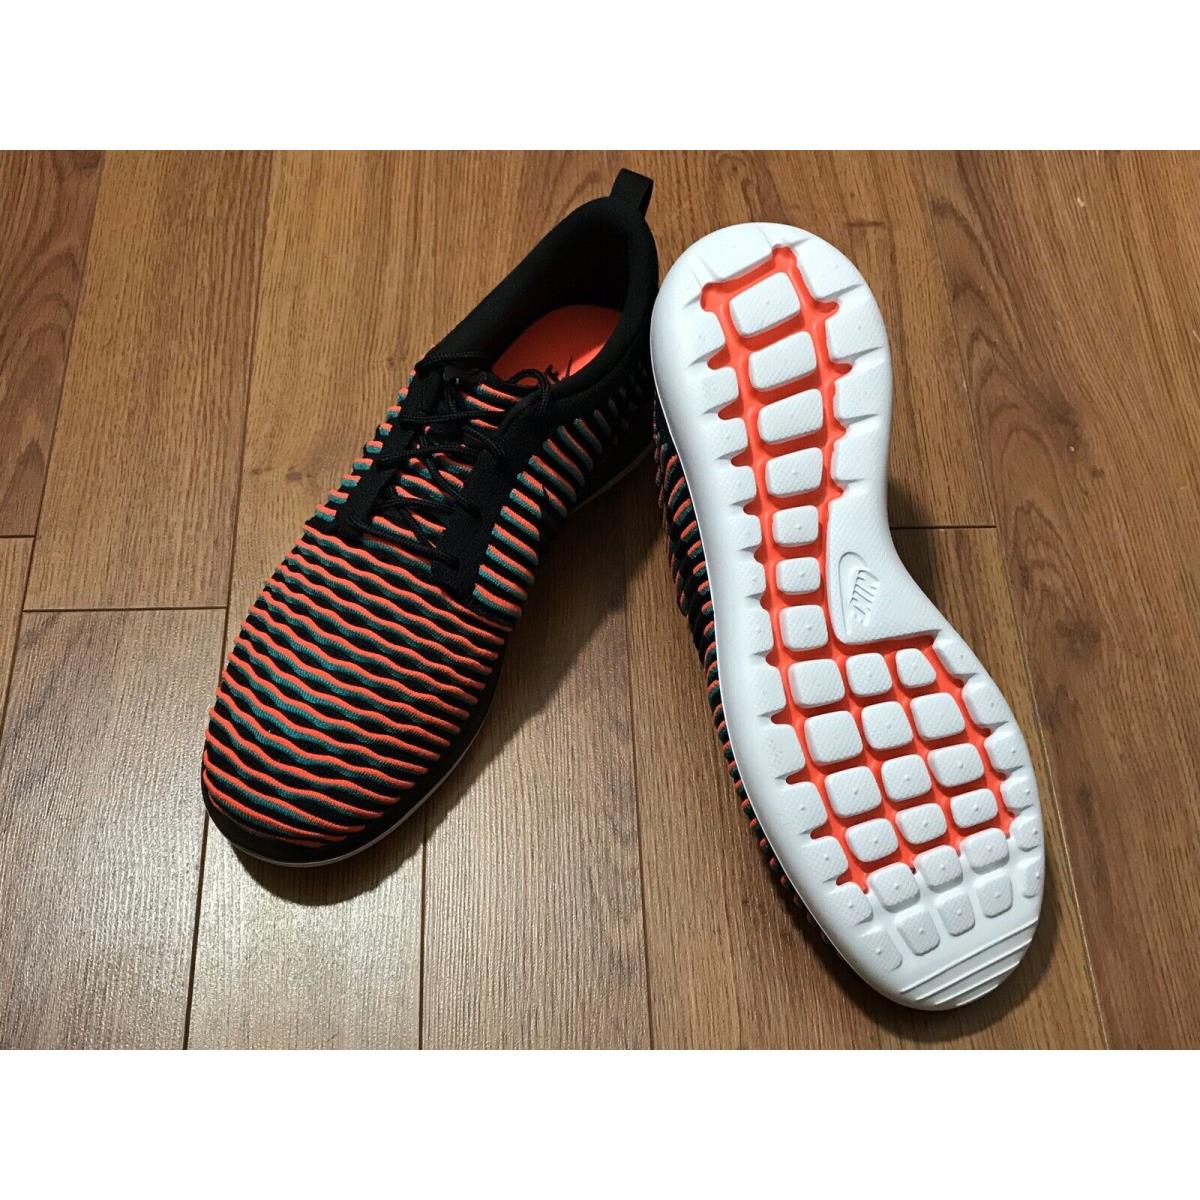 Nike shoes Roshe Two Flyknit - Black, Bright Crimson 9